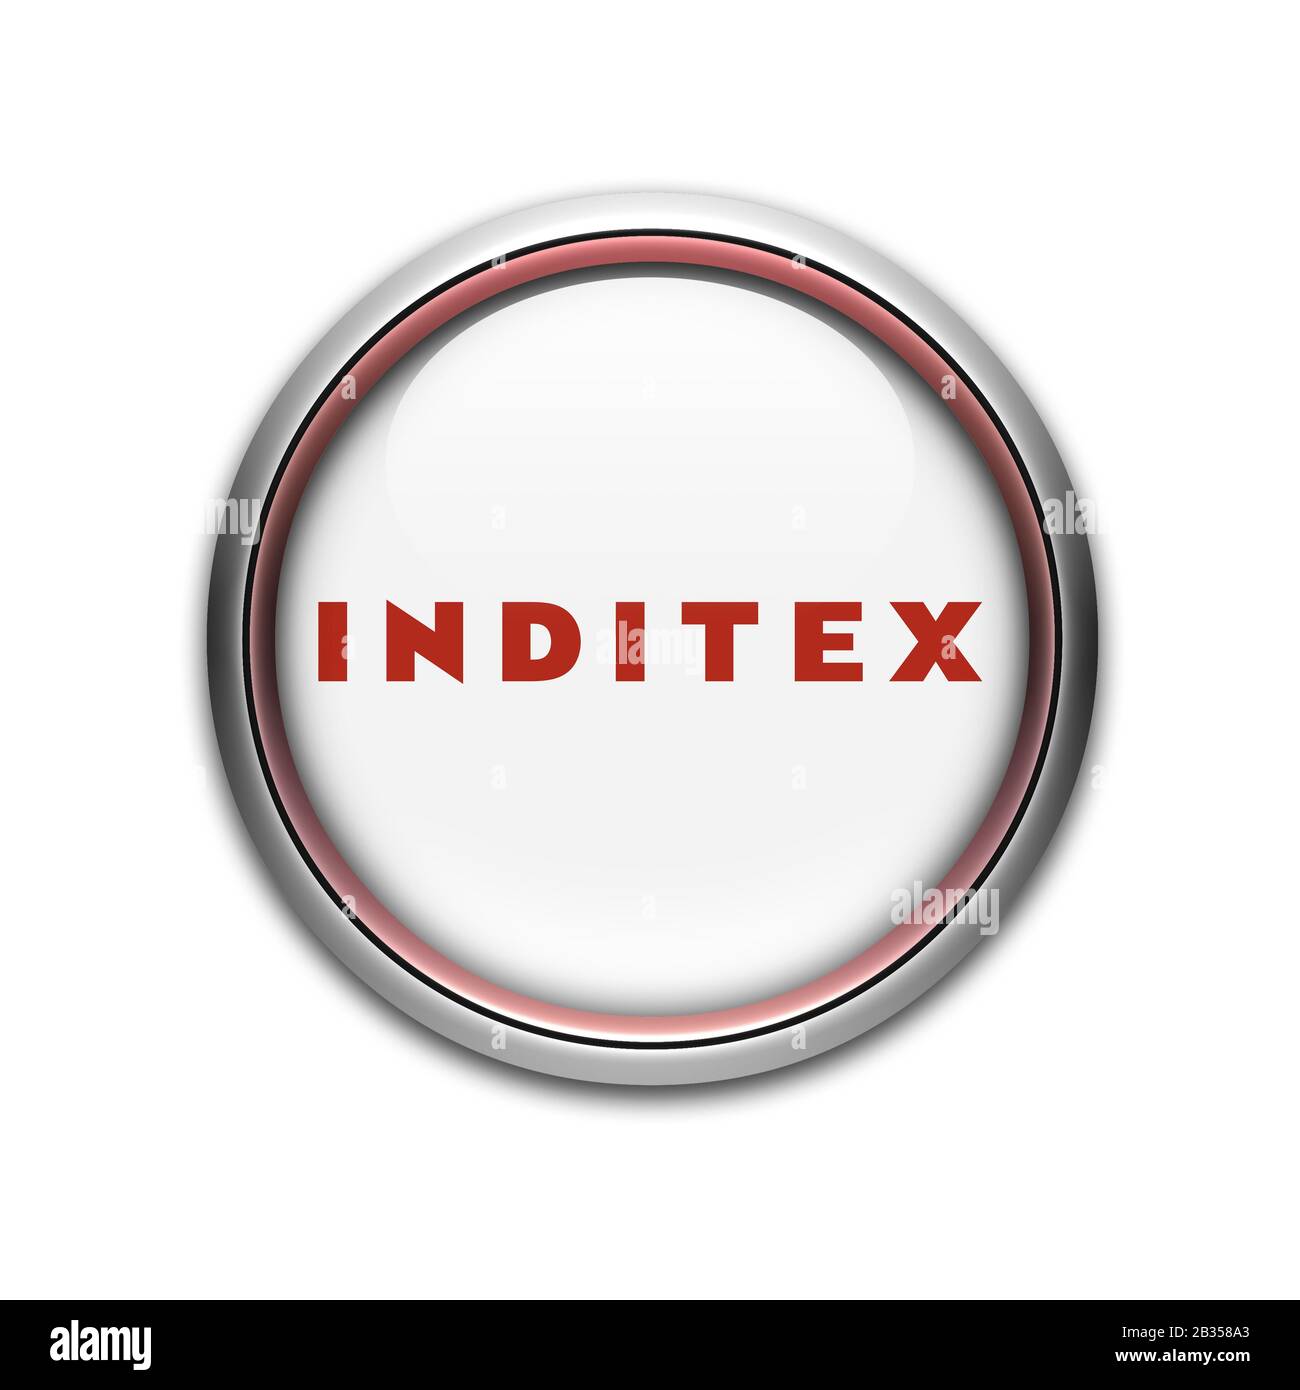 Inditex logo Stock Photo